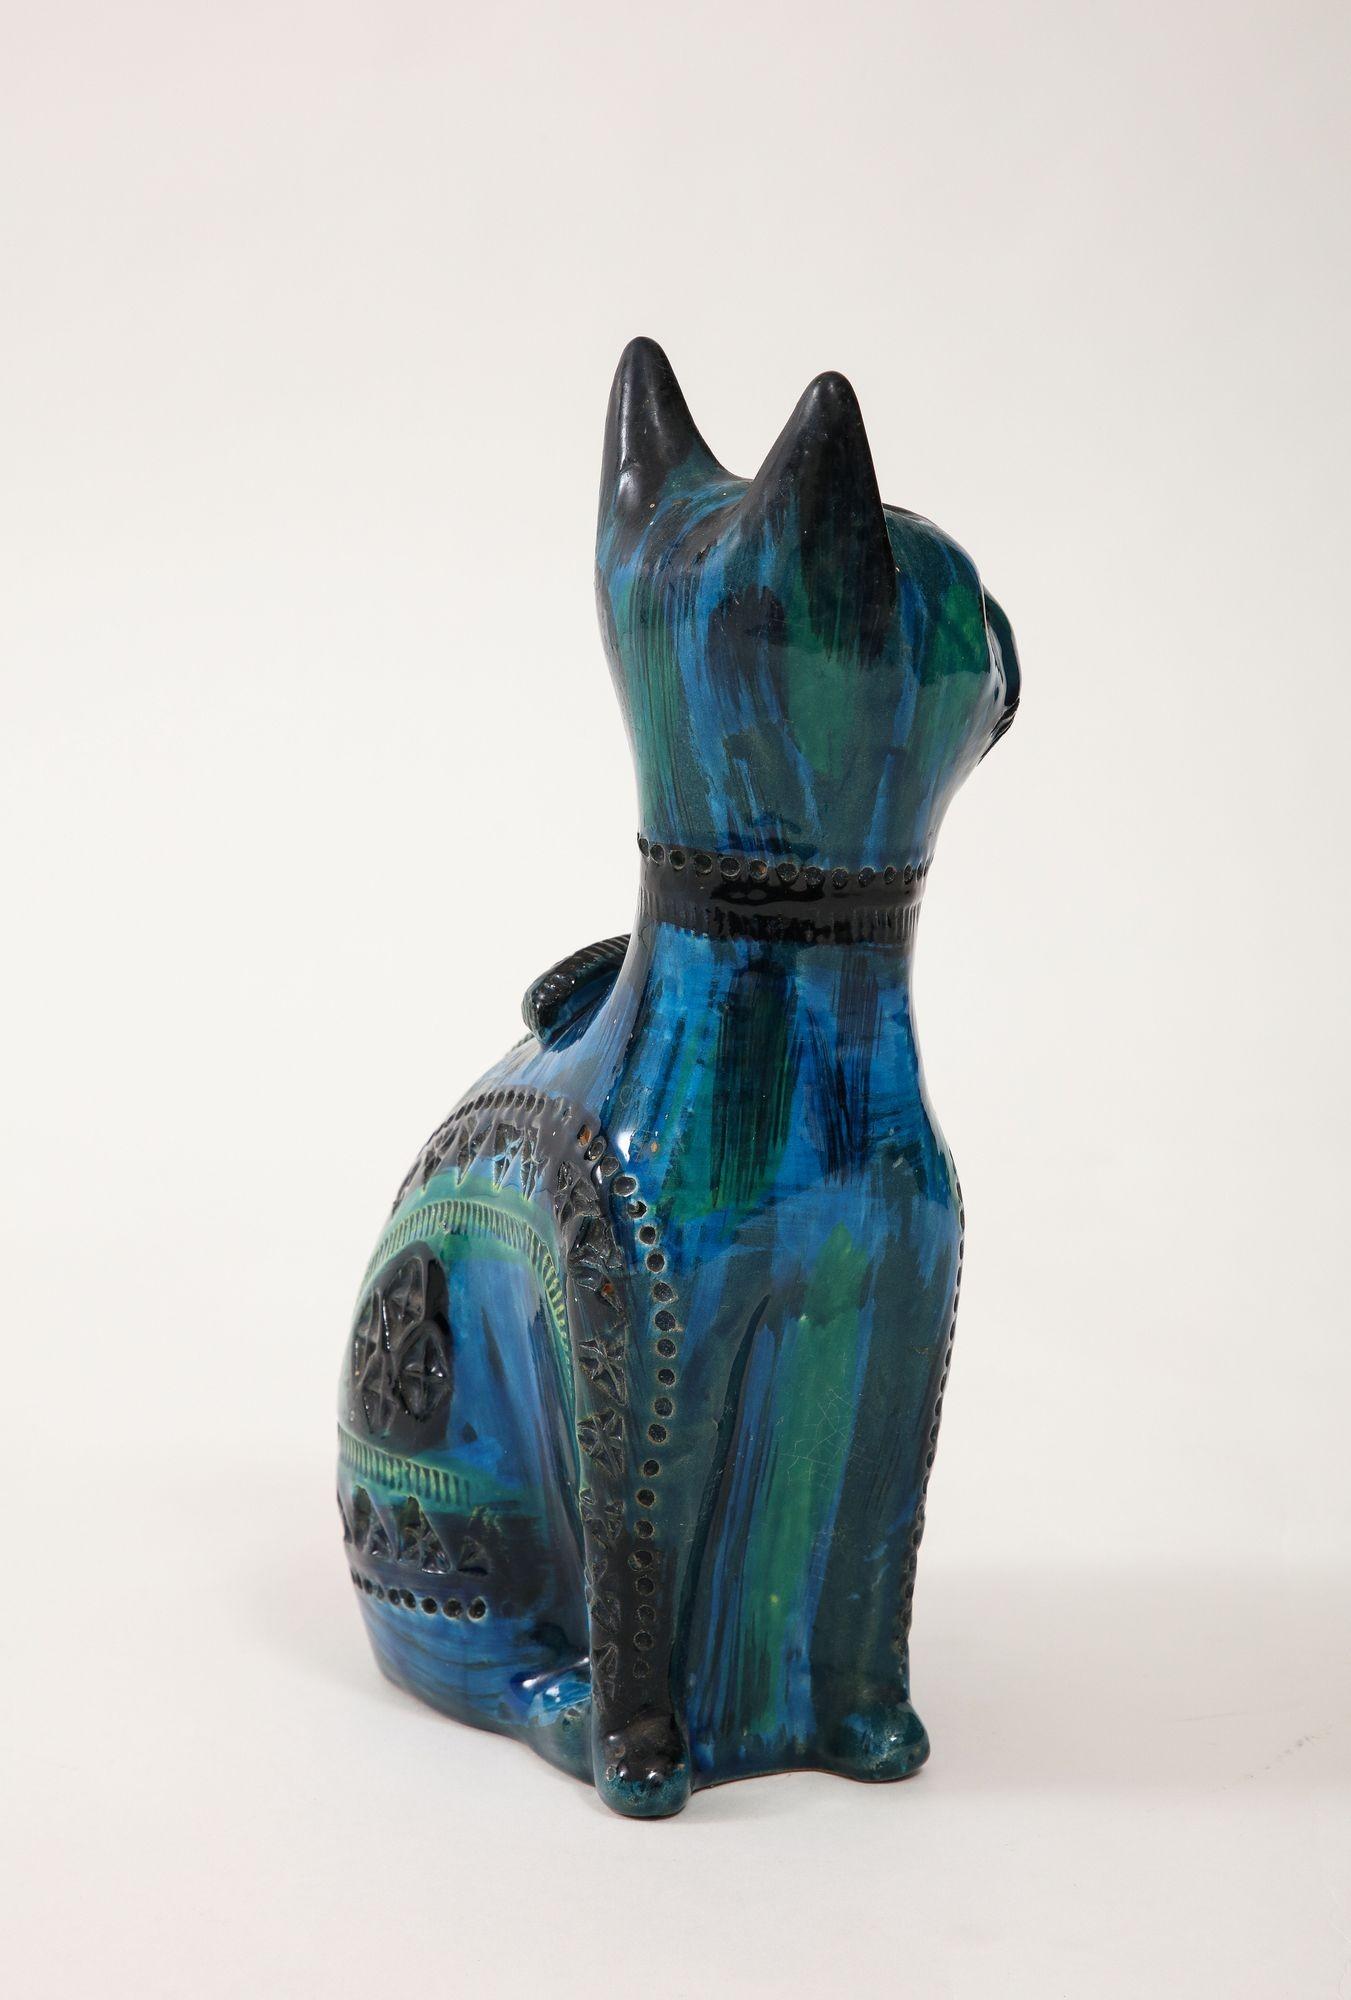 Mid-20th Century Ceramic Cat by Aldo Londi for Bitossi in 'Rimini blue' Italy Ca. 1960 For Sale